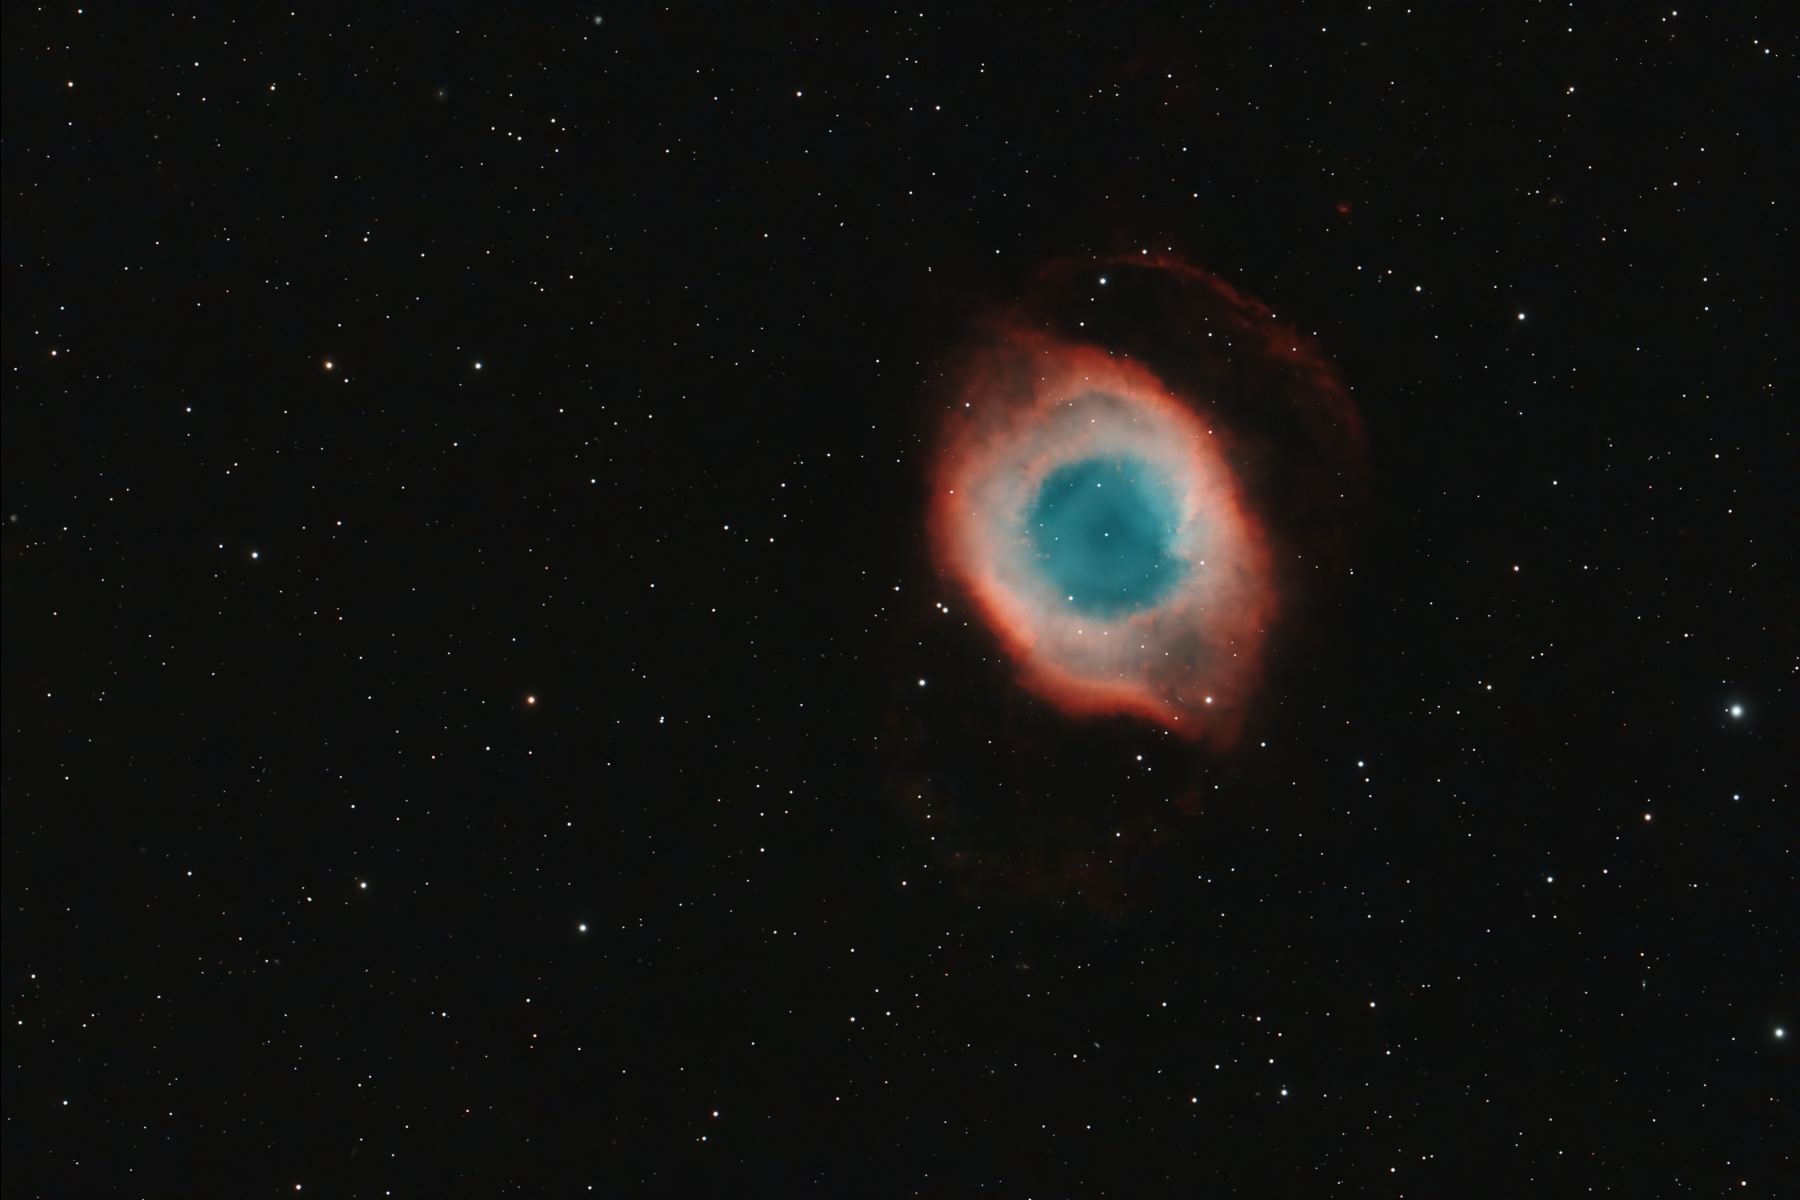 NGC 7293 in Aquarius, the Helix Nebula